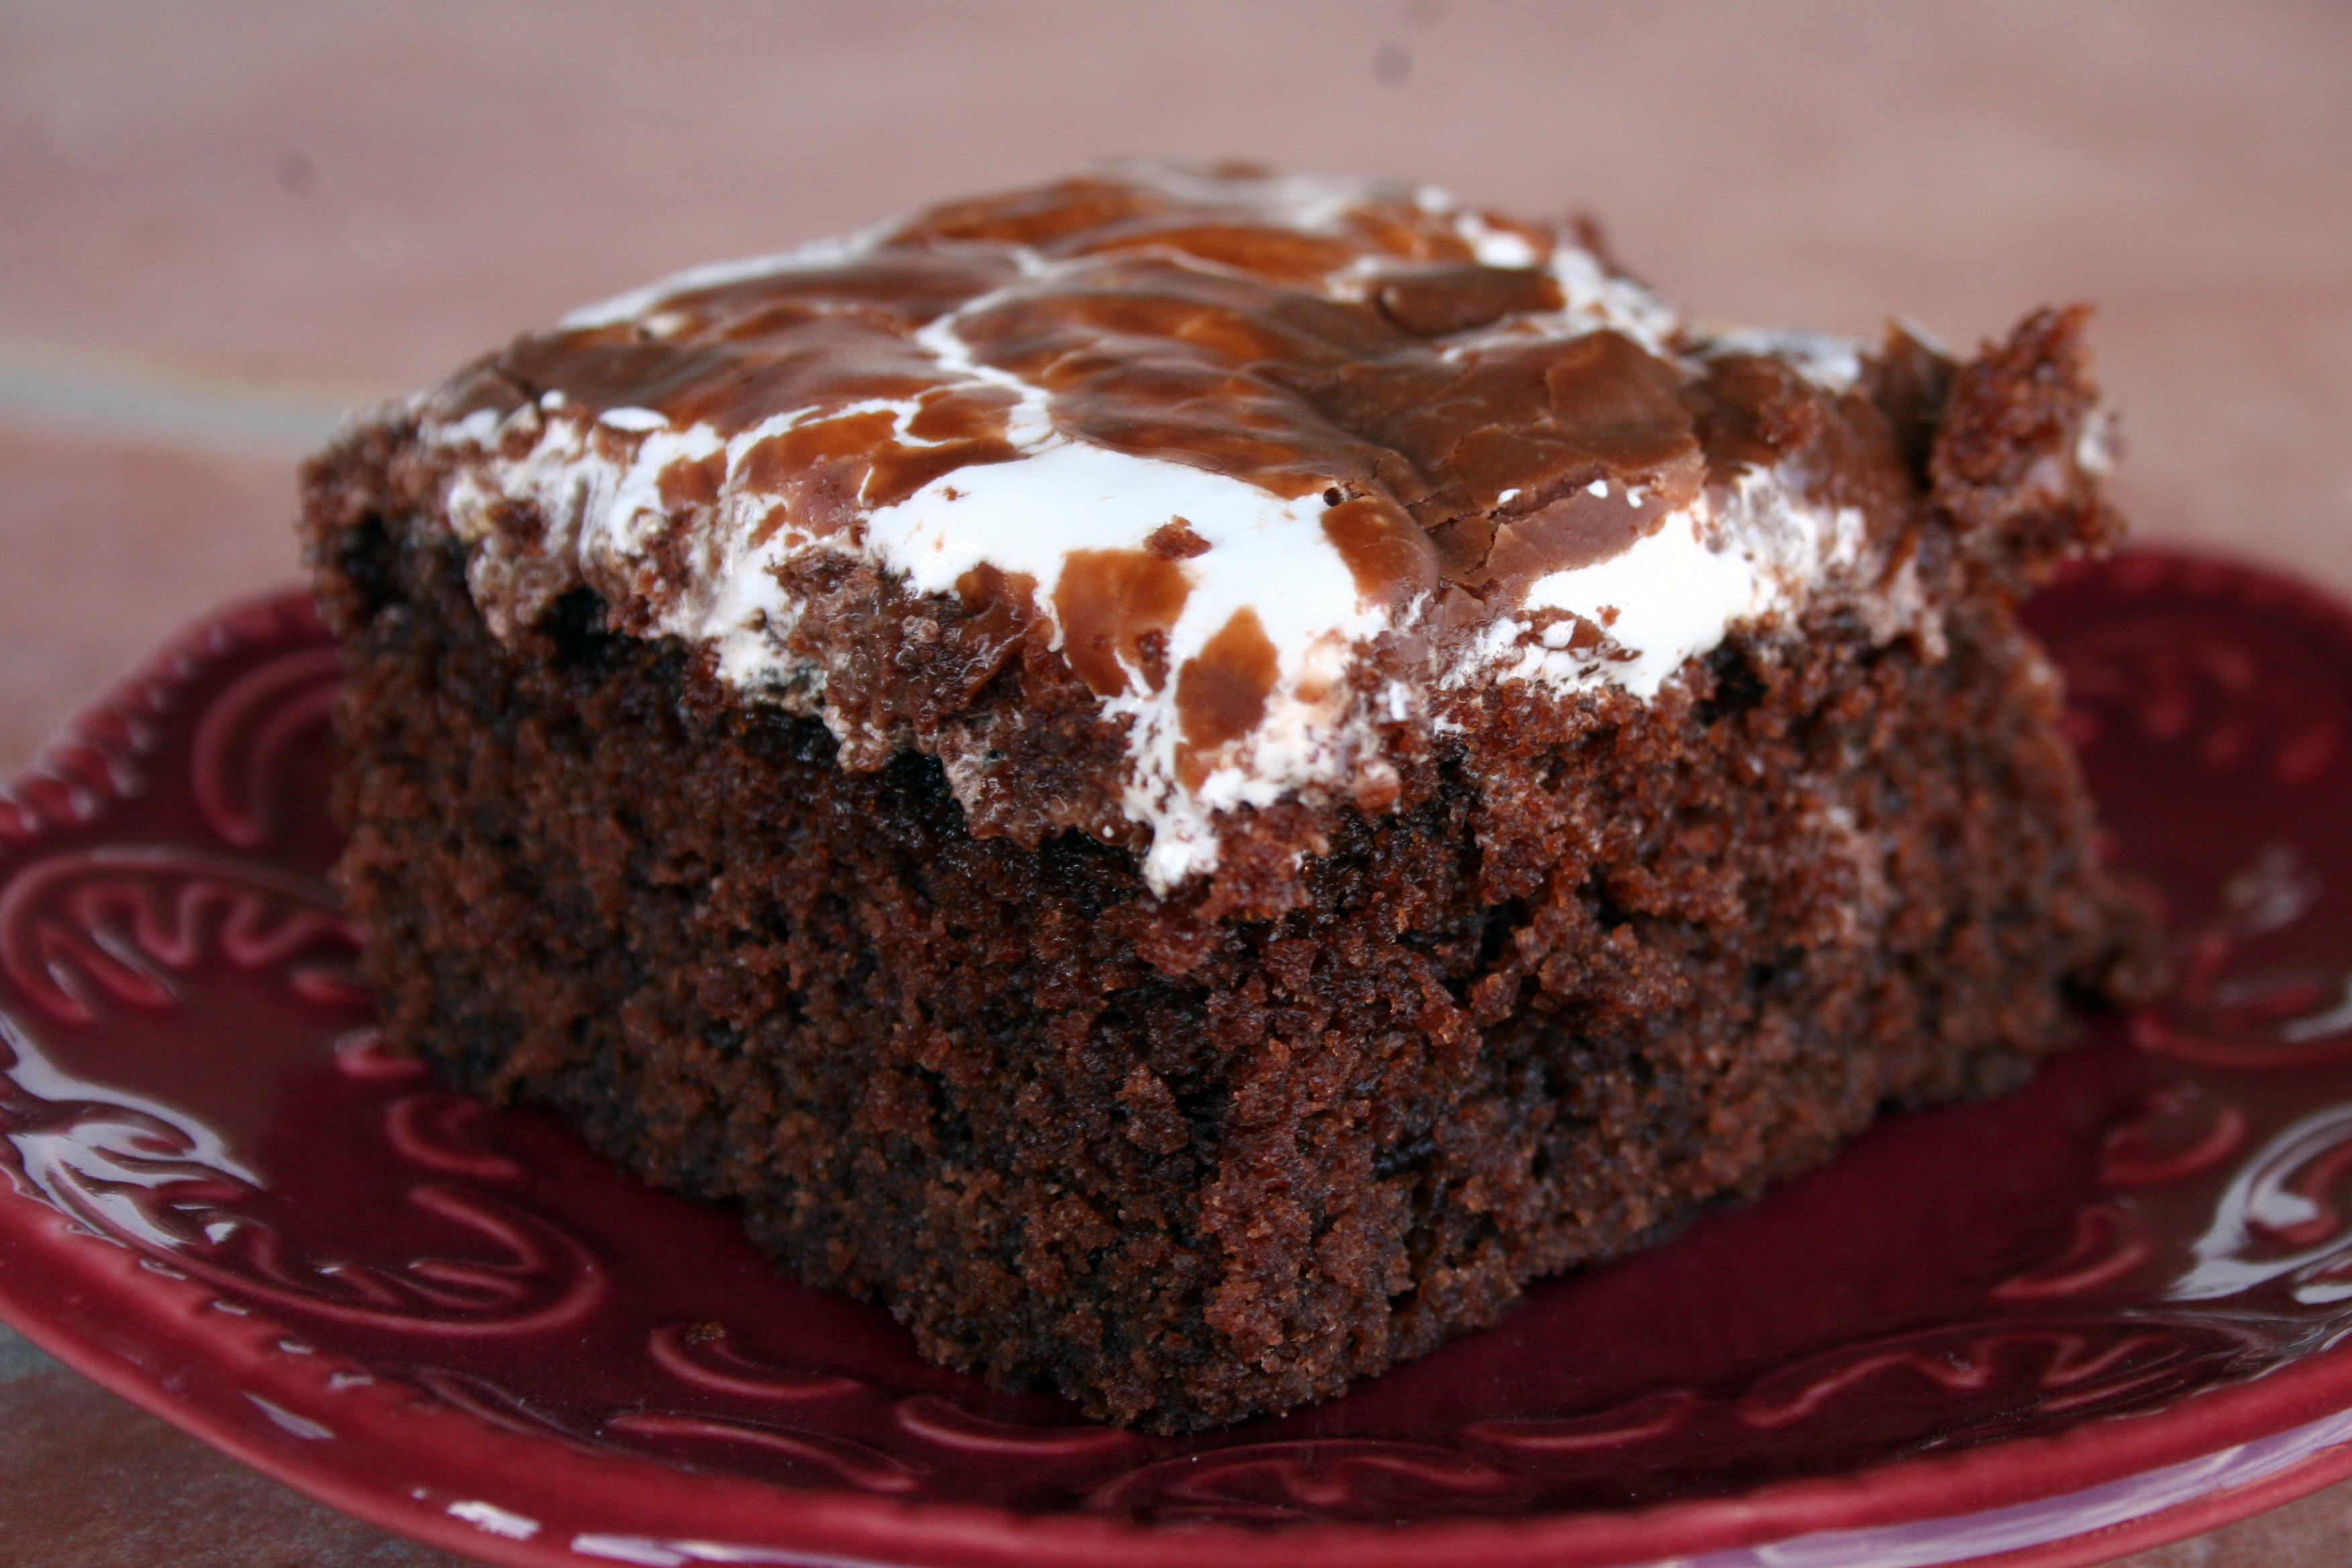 COKE CAKE-CRACKER BARREL STYLE